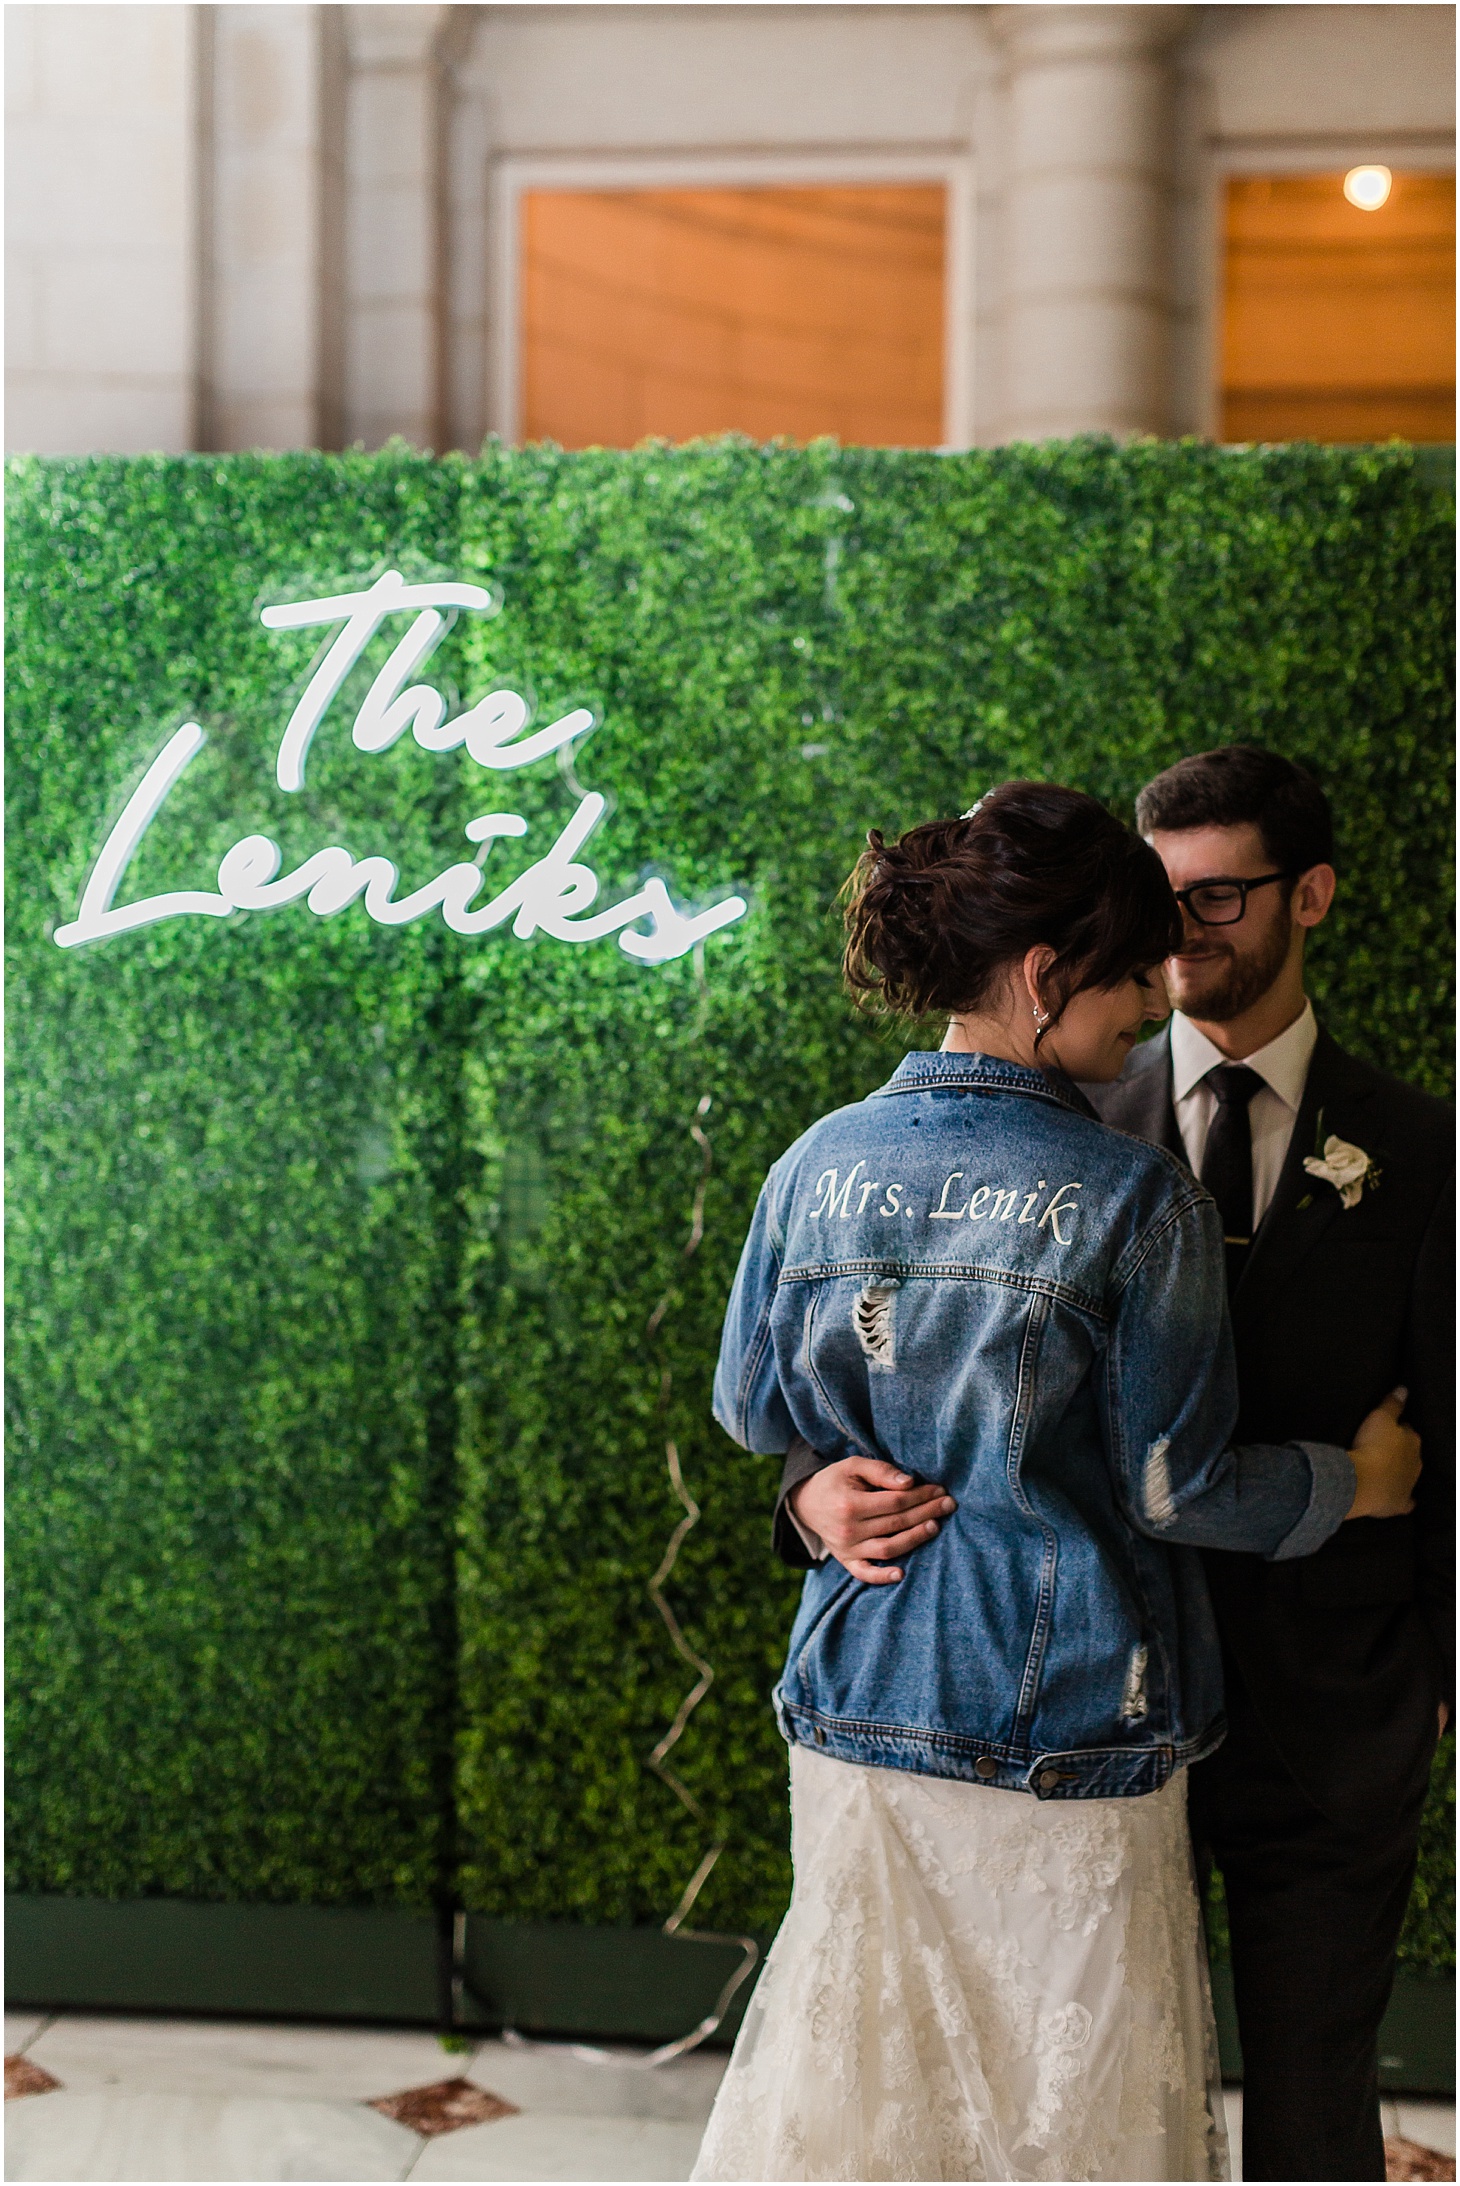 Wedding Reception at Union Station, Brite Lite Tribe Neon Sign, Hexagon-Inspired Emerald Wedding at Union Station in Washington DC, Sarah Bradshaw Photography